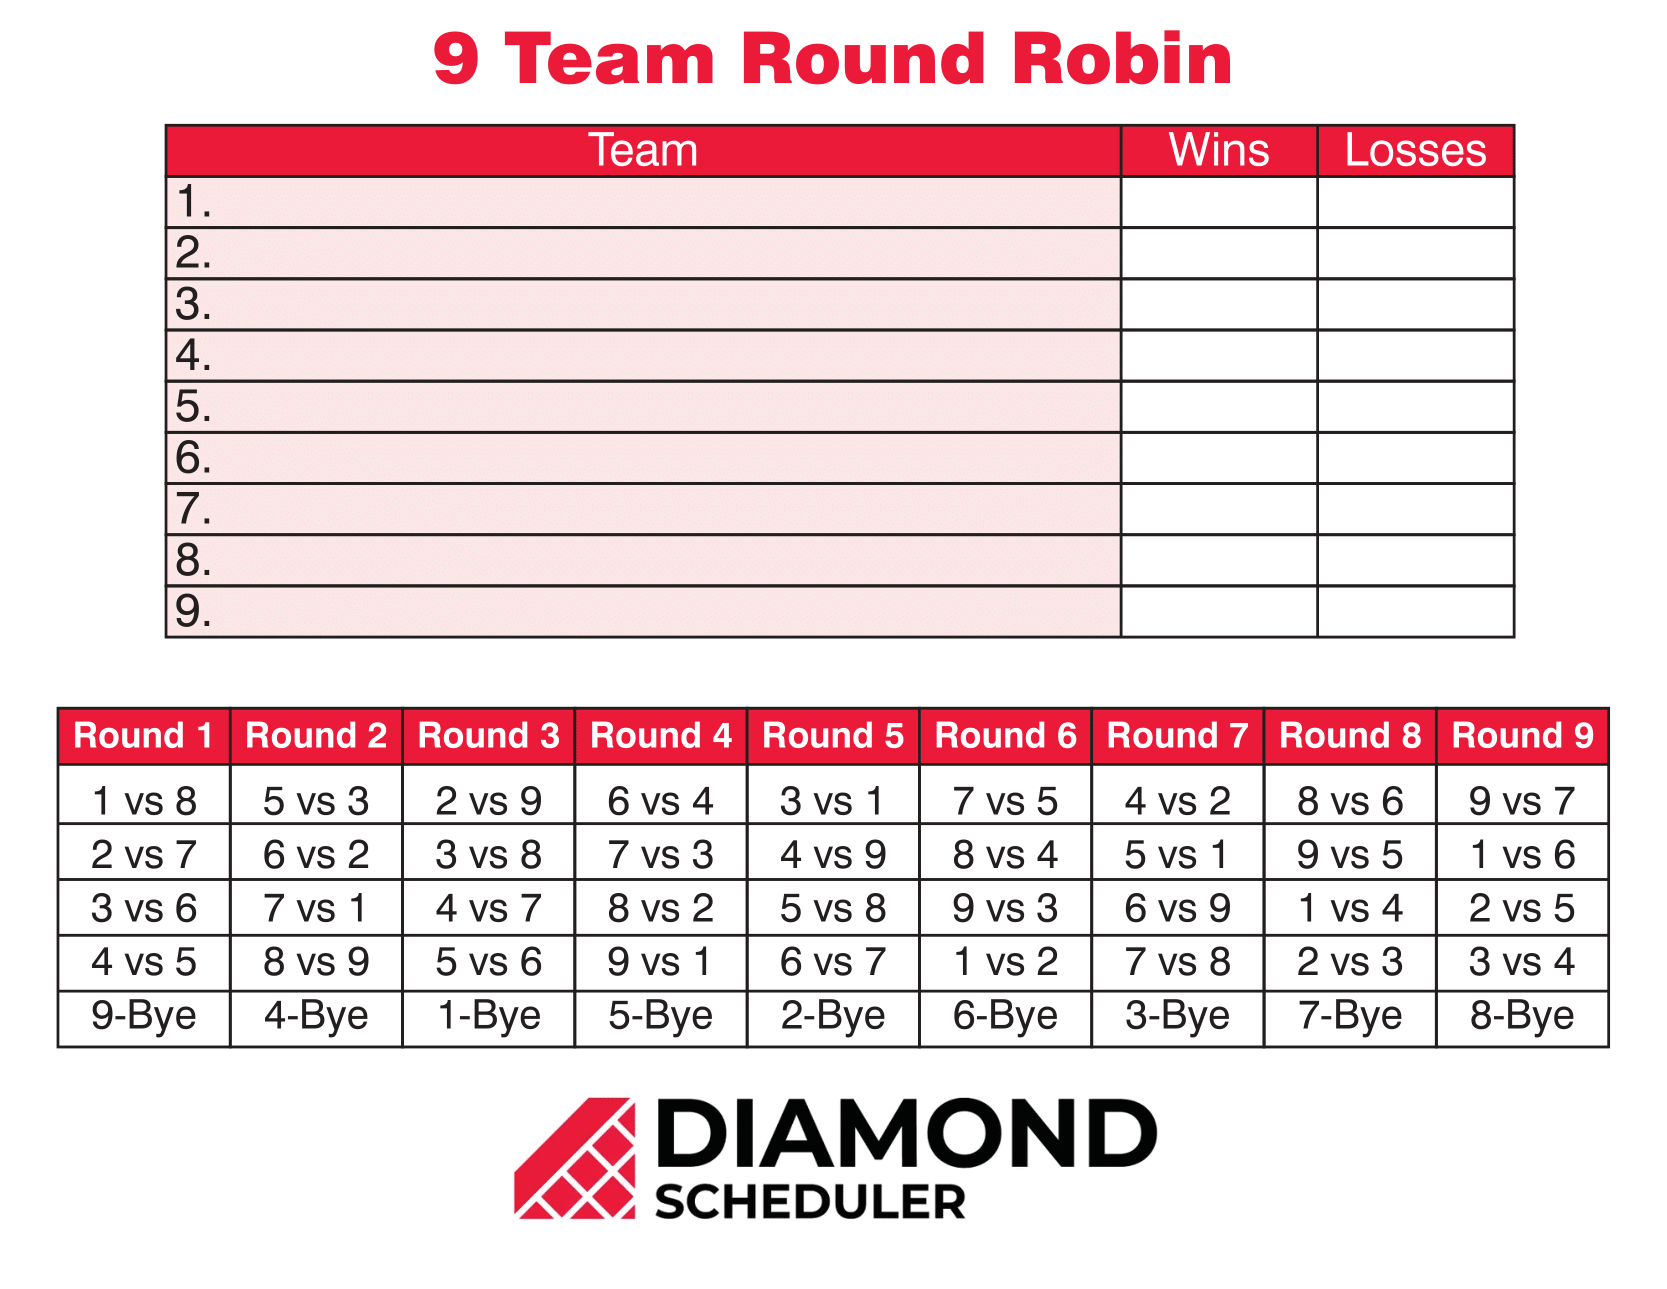 Free round robin tournament schedule / pairings generator –